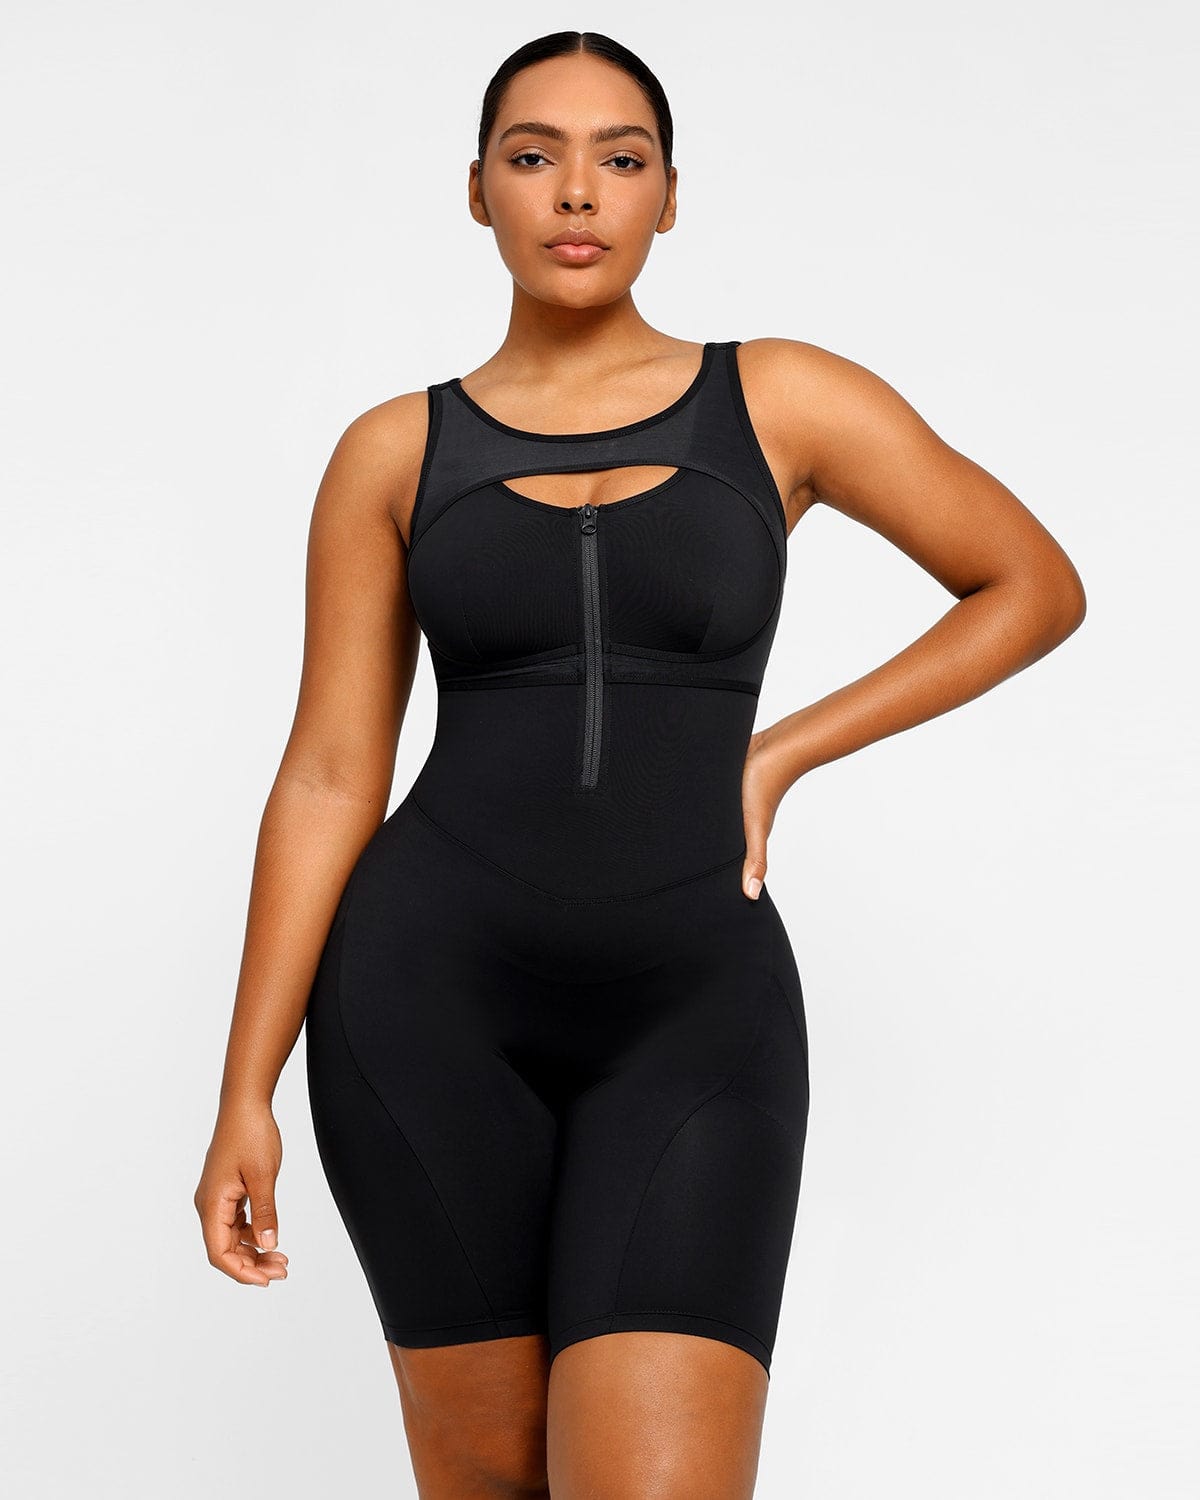 Womens luxury Black fitness jumpsuit, supplex sport jumpsuit